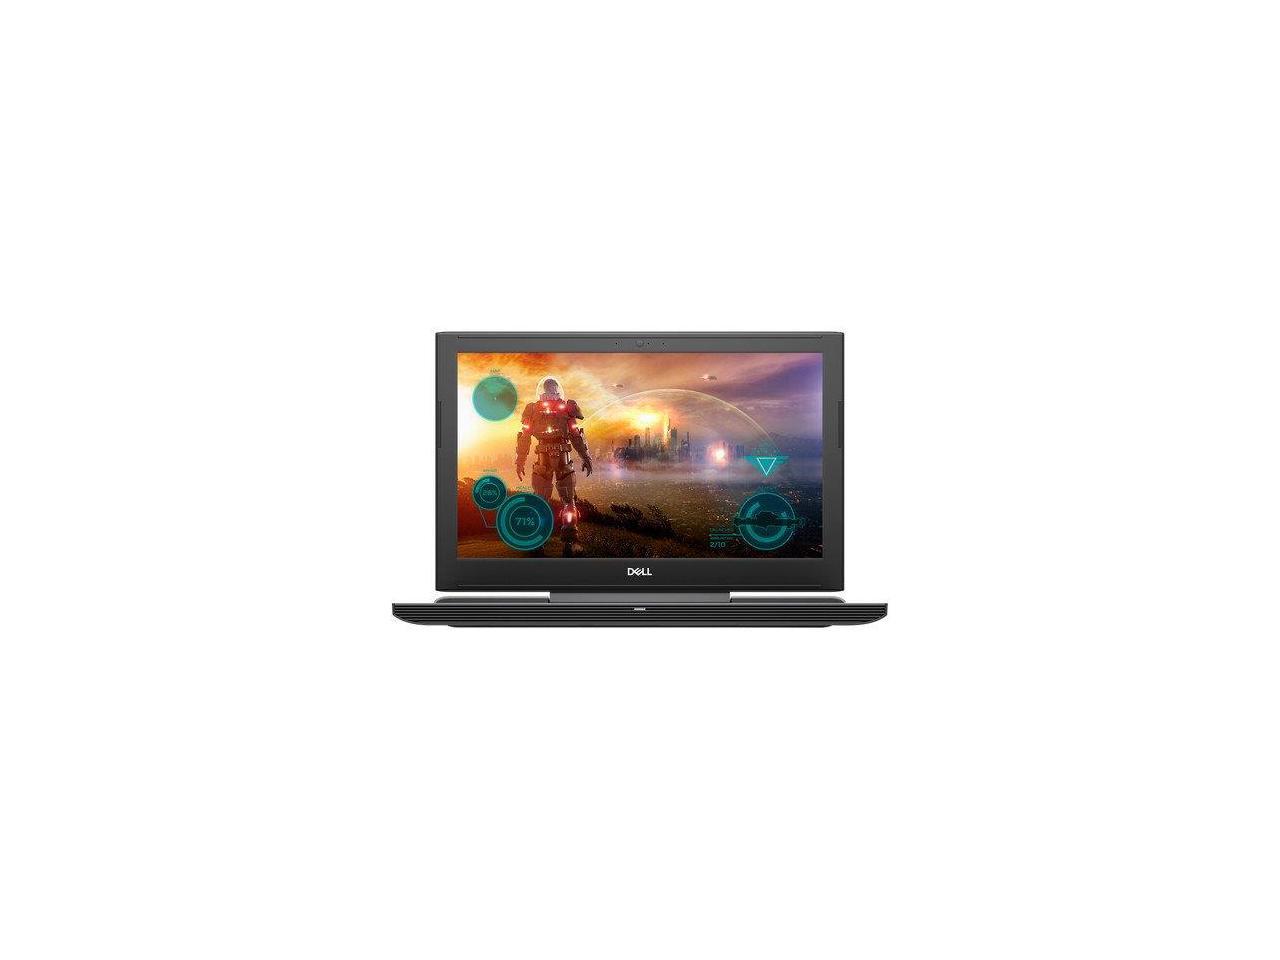 Dell Inspiron 7000 15.6" IPS FHD Gaming Laptop | VR Ready | Intel Quad Core i5-7300HQ | 12GB RAM 128GB SSD 2TB HDD | NVIDIA GeForce GTX 1060 6GB GDDR5 | Windows 10 Black